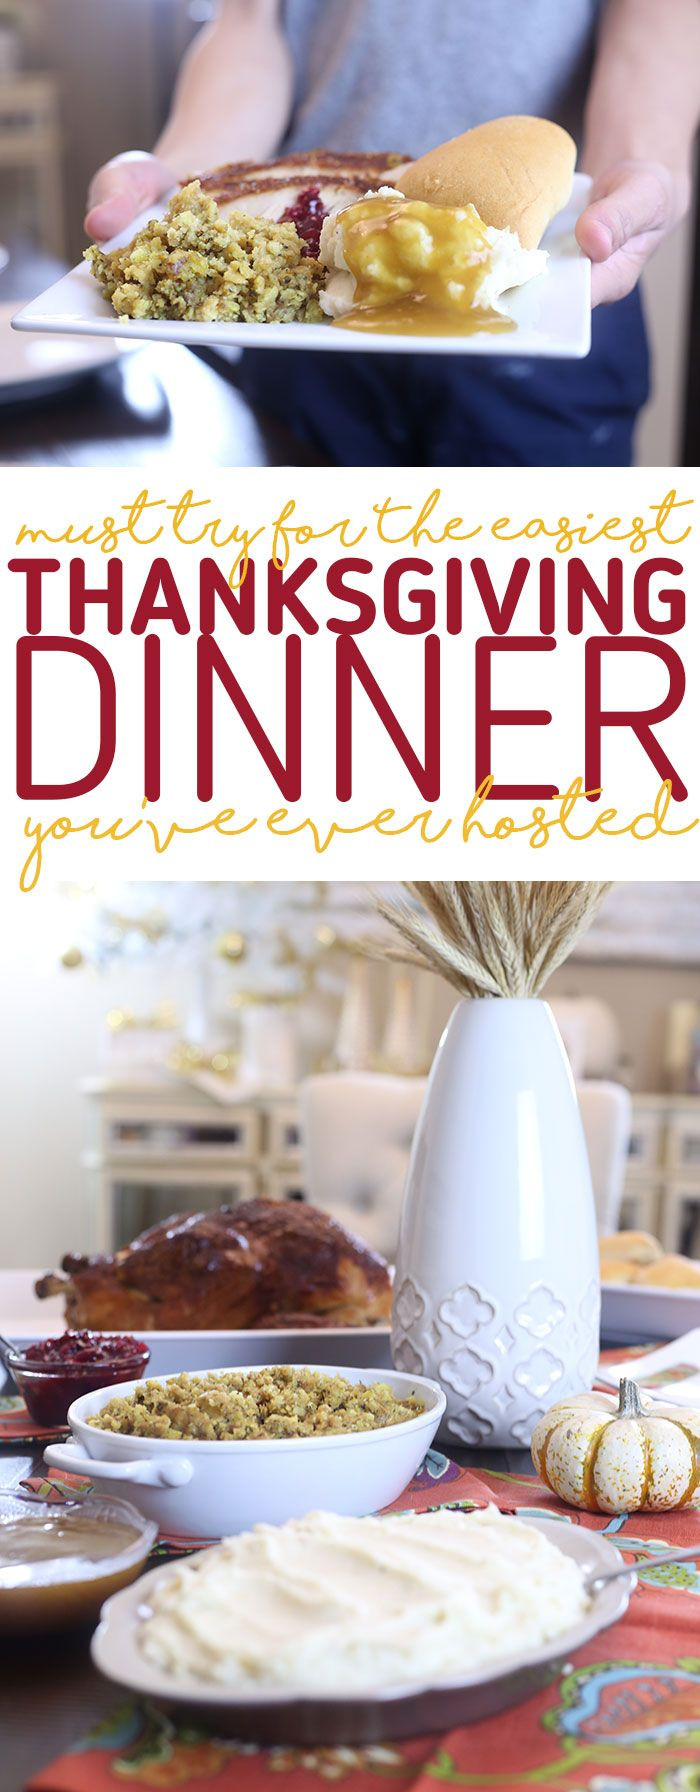 Precooked Thanksgiving Dinner
 Best 25 Hosting thanksgiving ideas on Pinterest